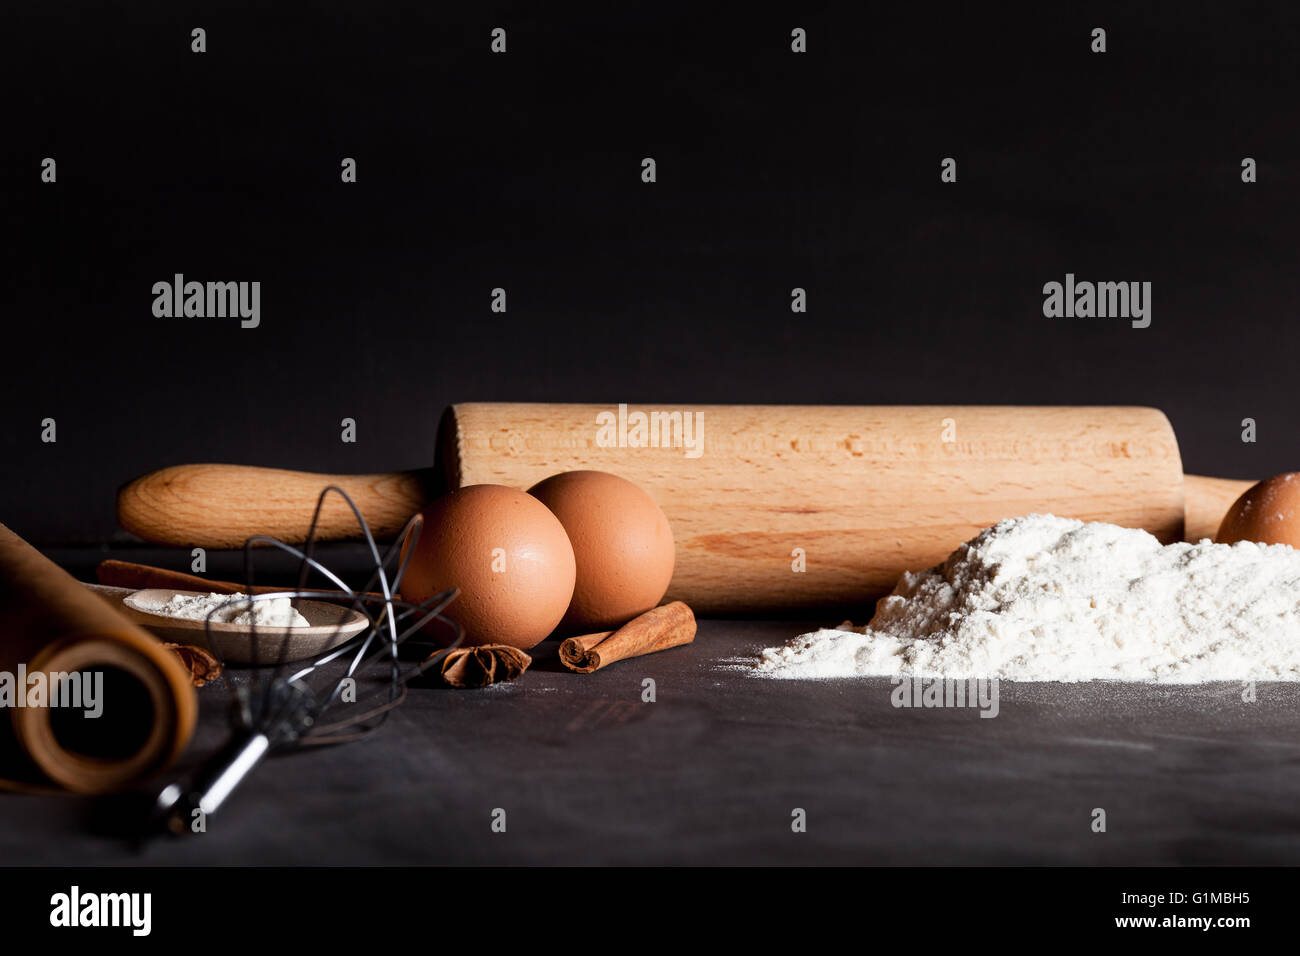 Ingredients like eggs, flour, cinnamon, anise, rolling pin, paper on blackboard Stock Photo